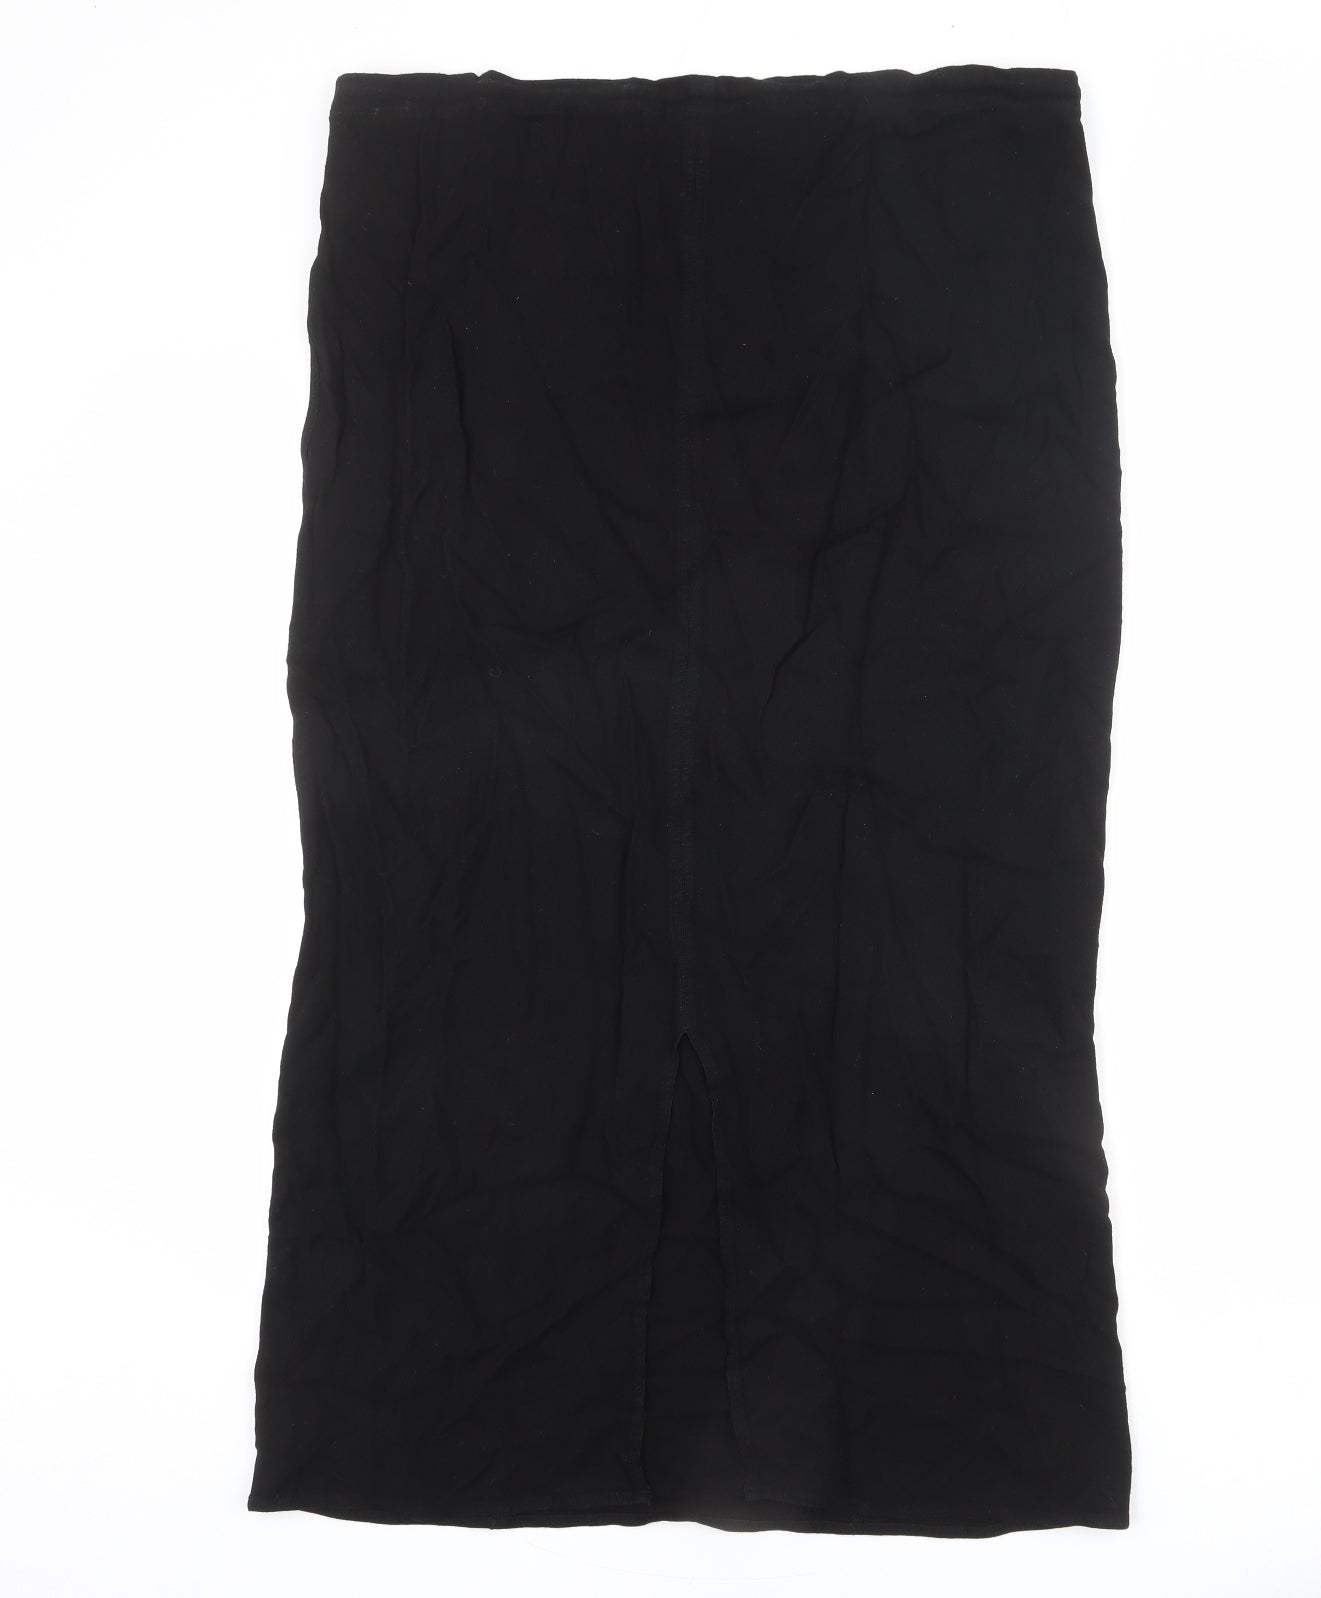 Offshoot Womens Black Viscose A-Line Skirt Size M - Size M-L